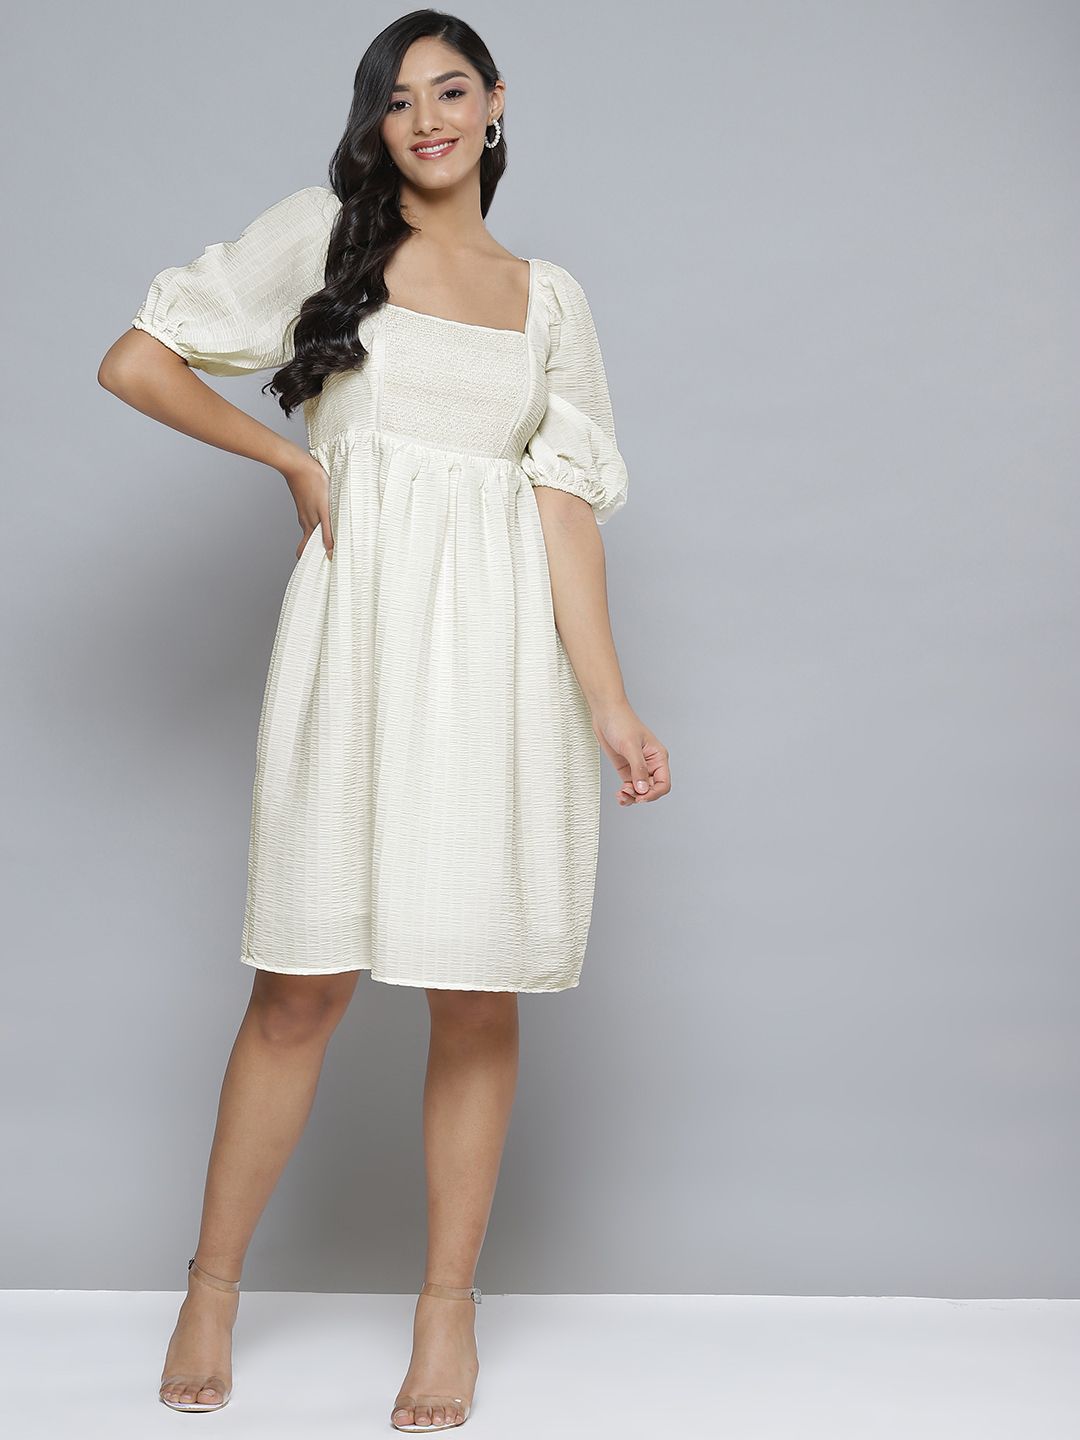 Femella Off White Chiffon Dress Price in India